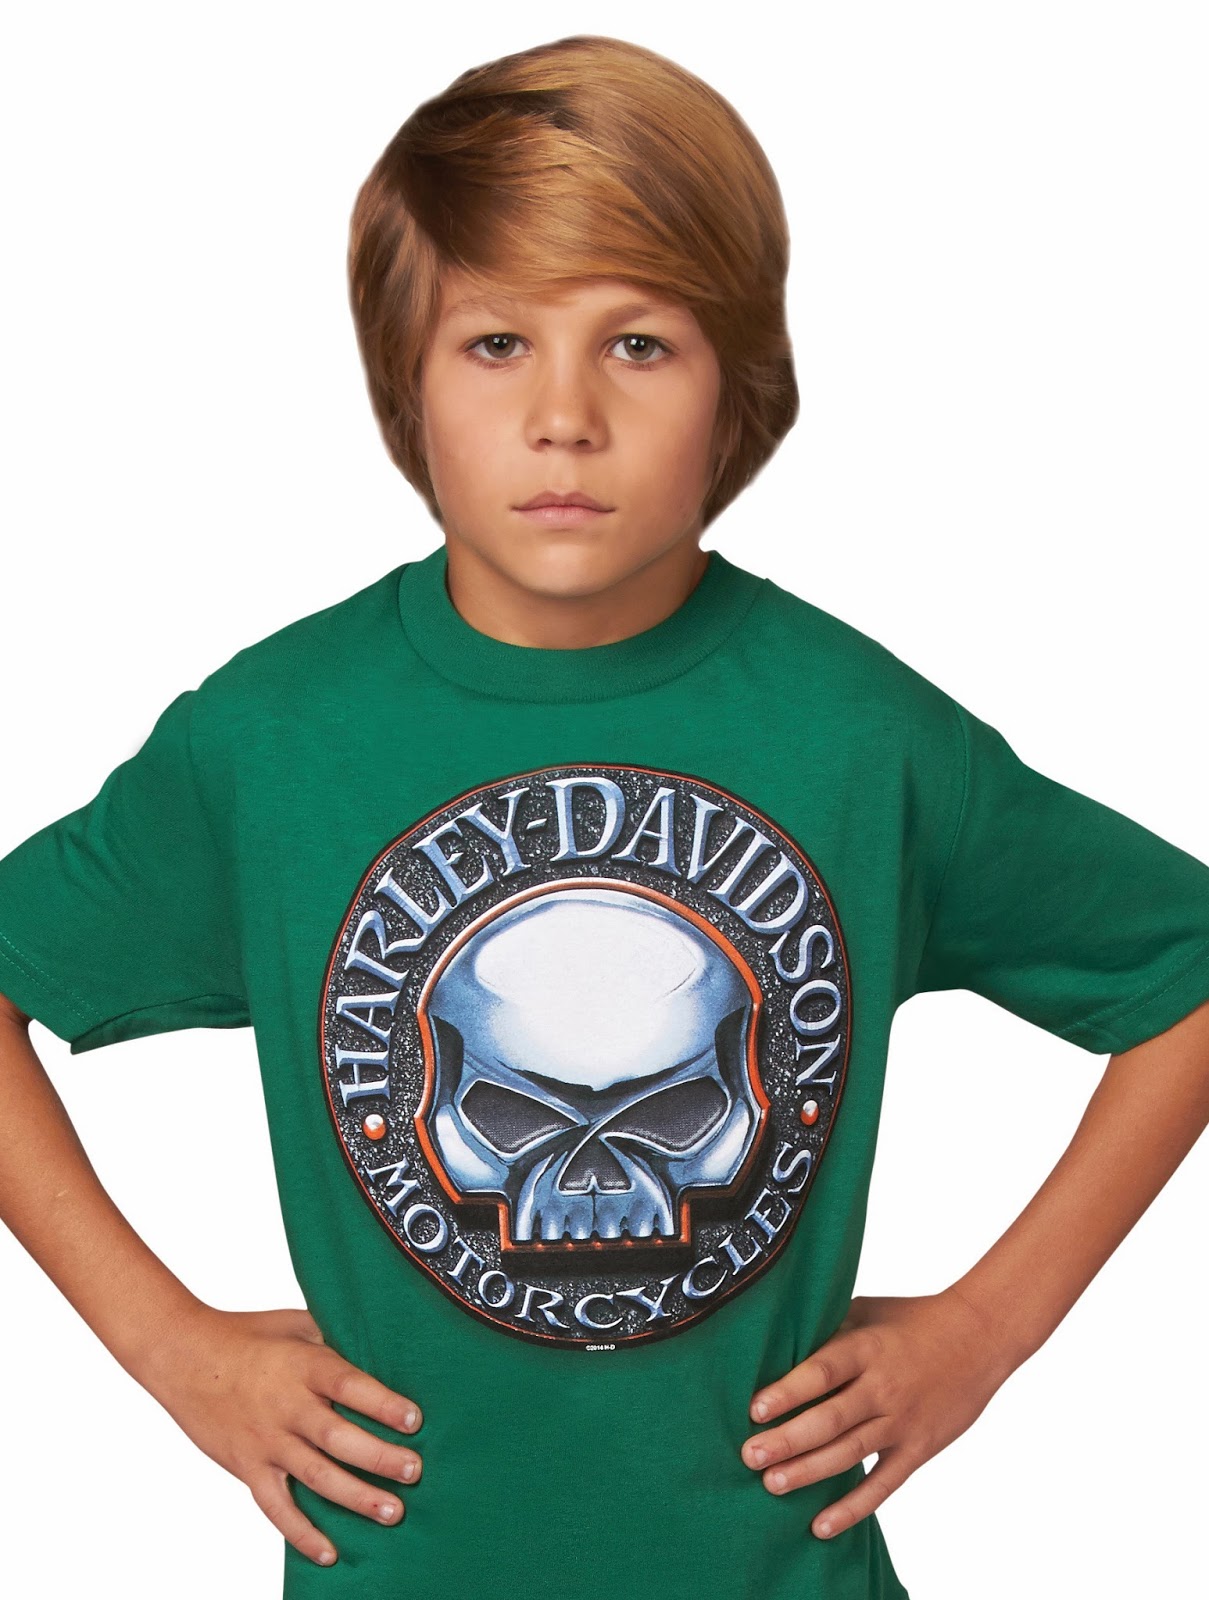 http://www.adventureharley.com/harley-davidson-kids-t-shirt-kelly-green